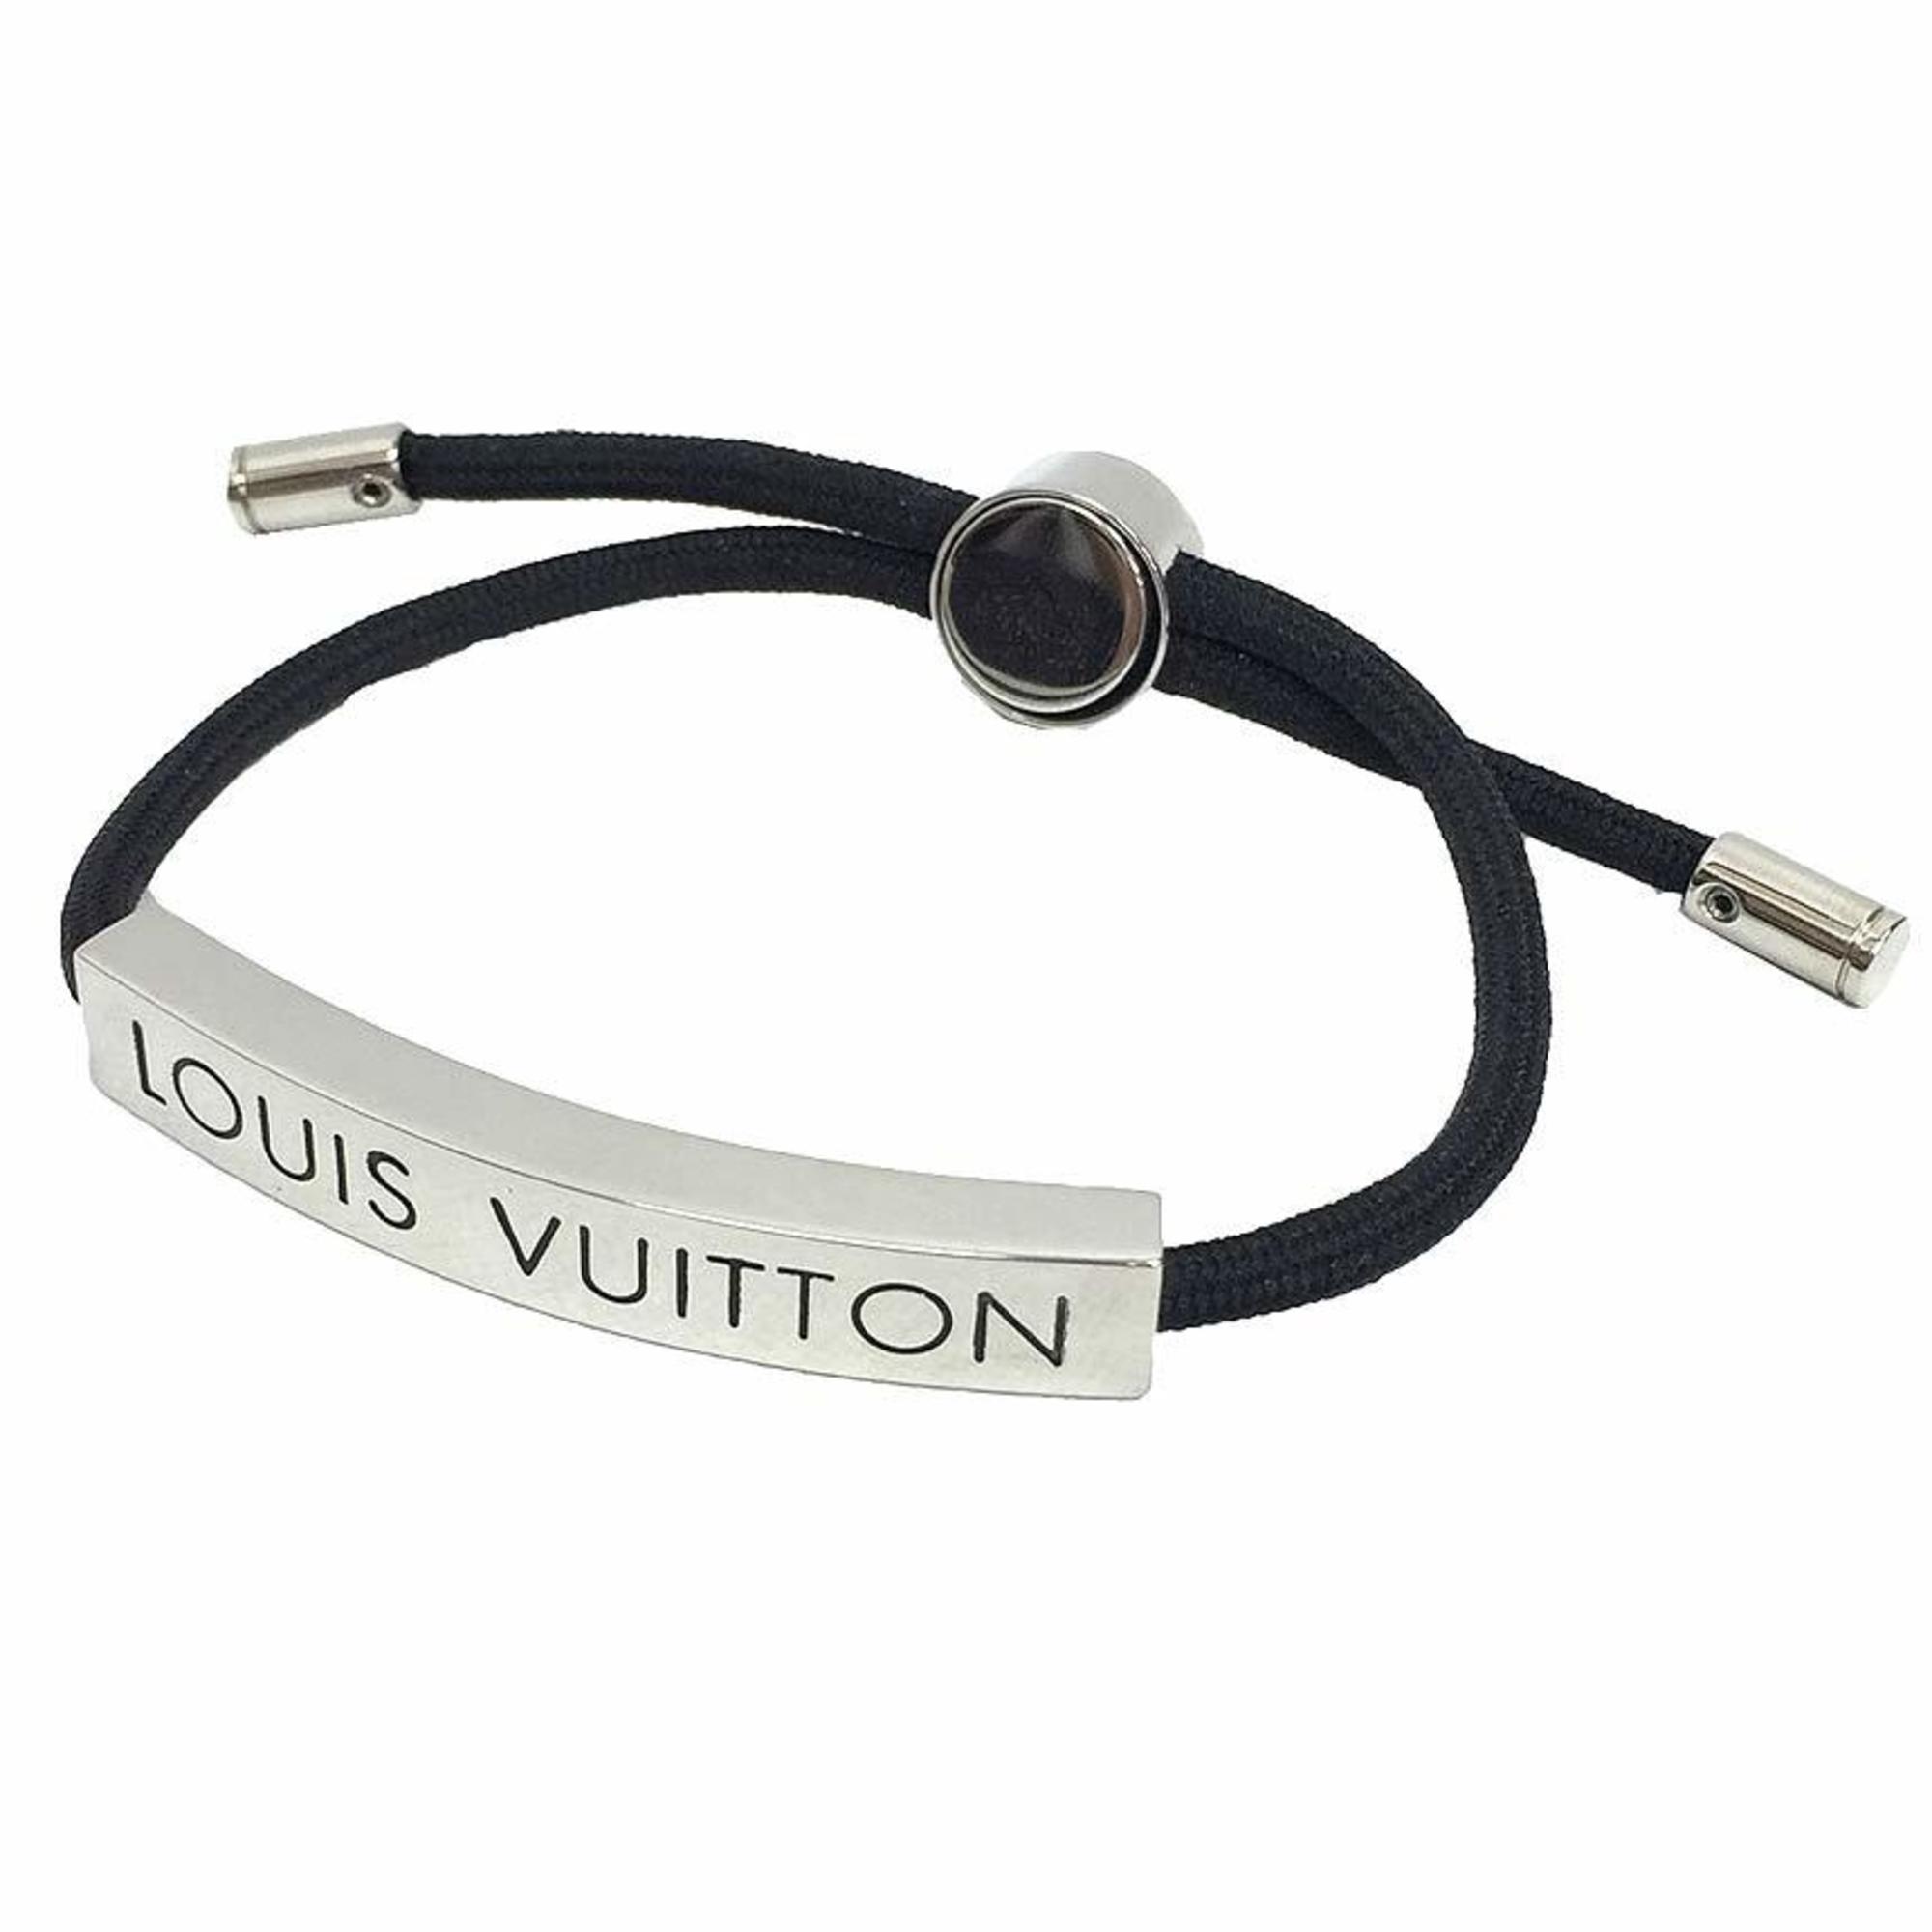 Louis Vuitton LV Space Bracelet Metal and Nylon Blue 176183381